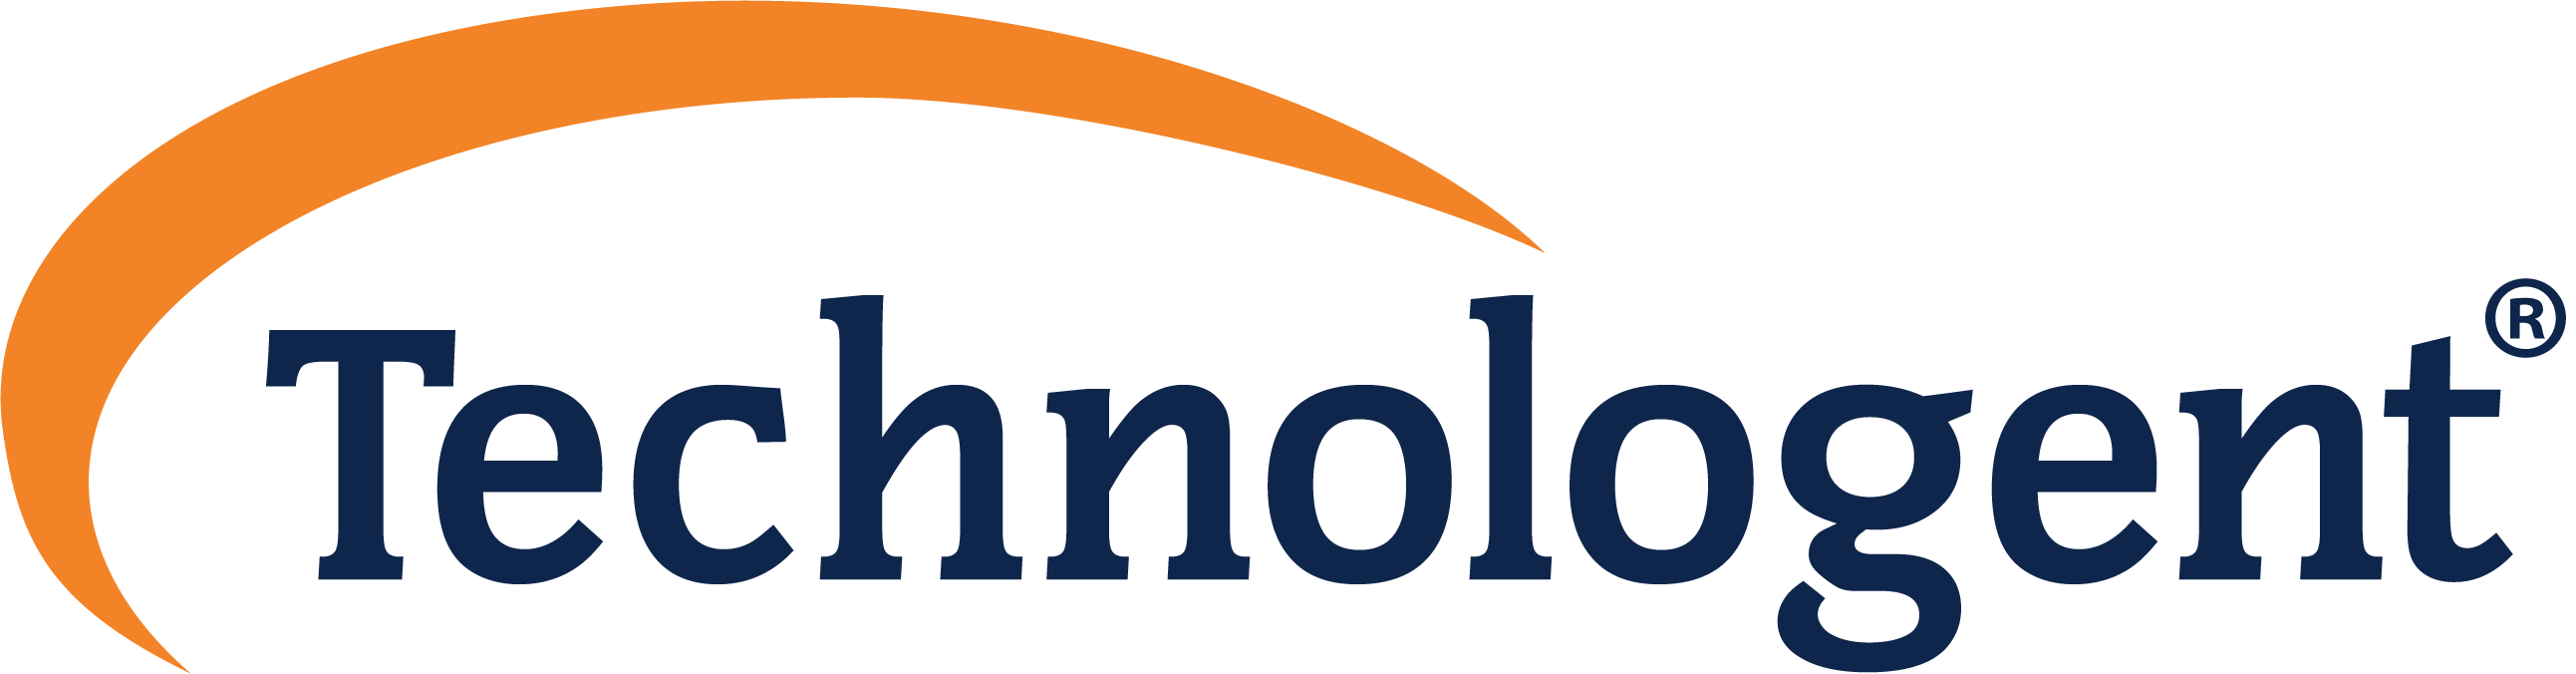 Technologent logo